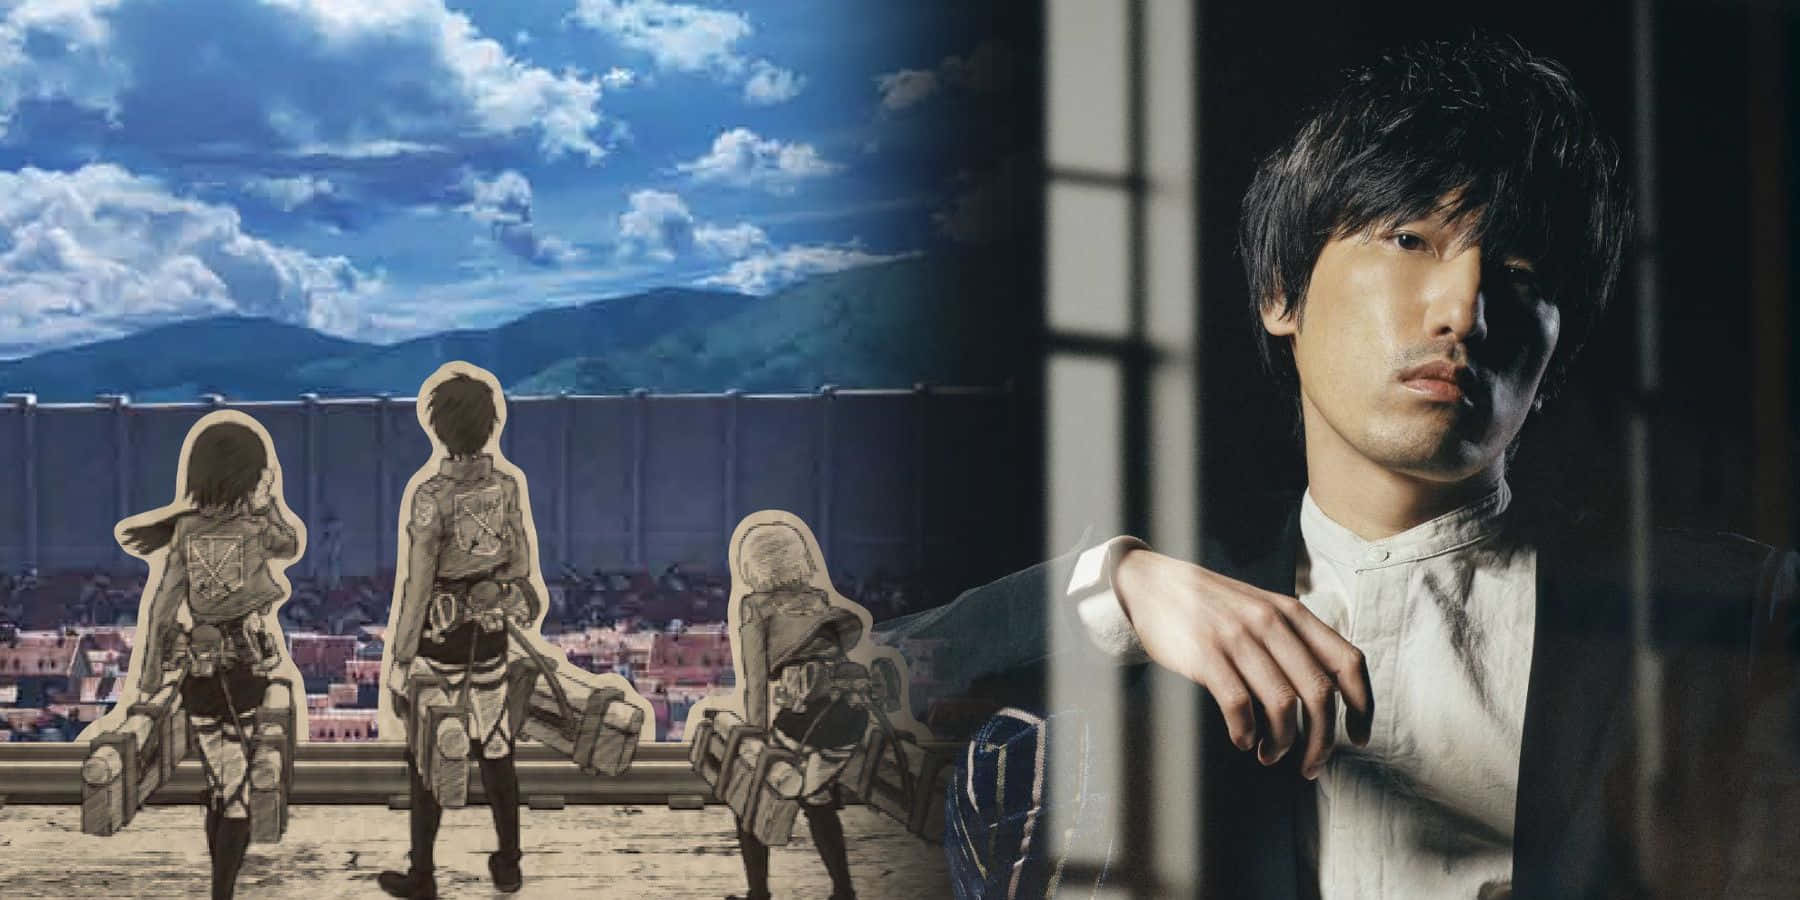 Hiroyuki Sawano, Composer of Memorable Anime Soundtracks" Wallpaper